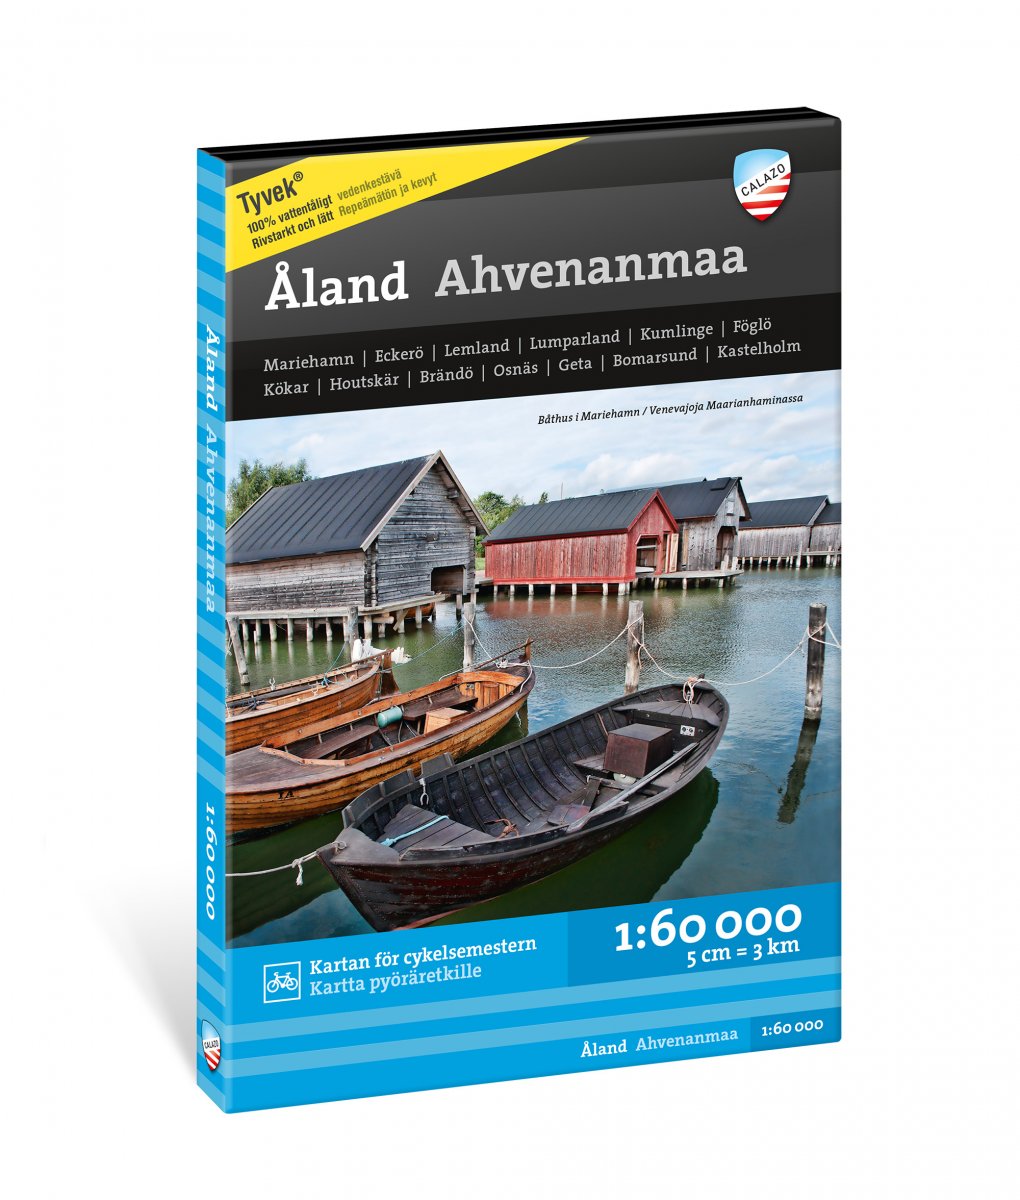 Online bestellen: Wandelkaart - Waterkaart Sjö- och kustkartor FI Åland Ahvenanmaa - Aland eilanden | Calazo